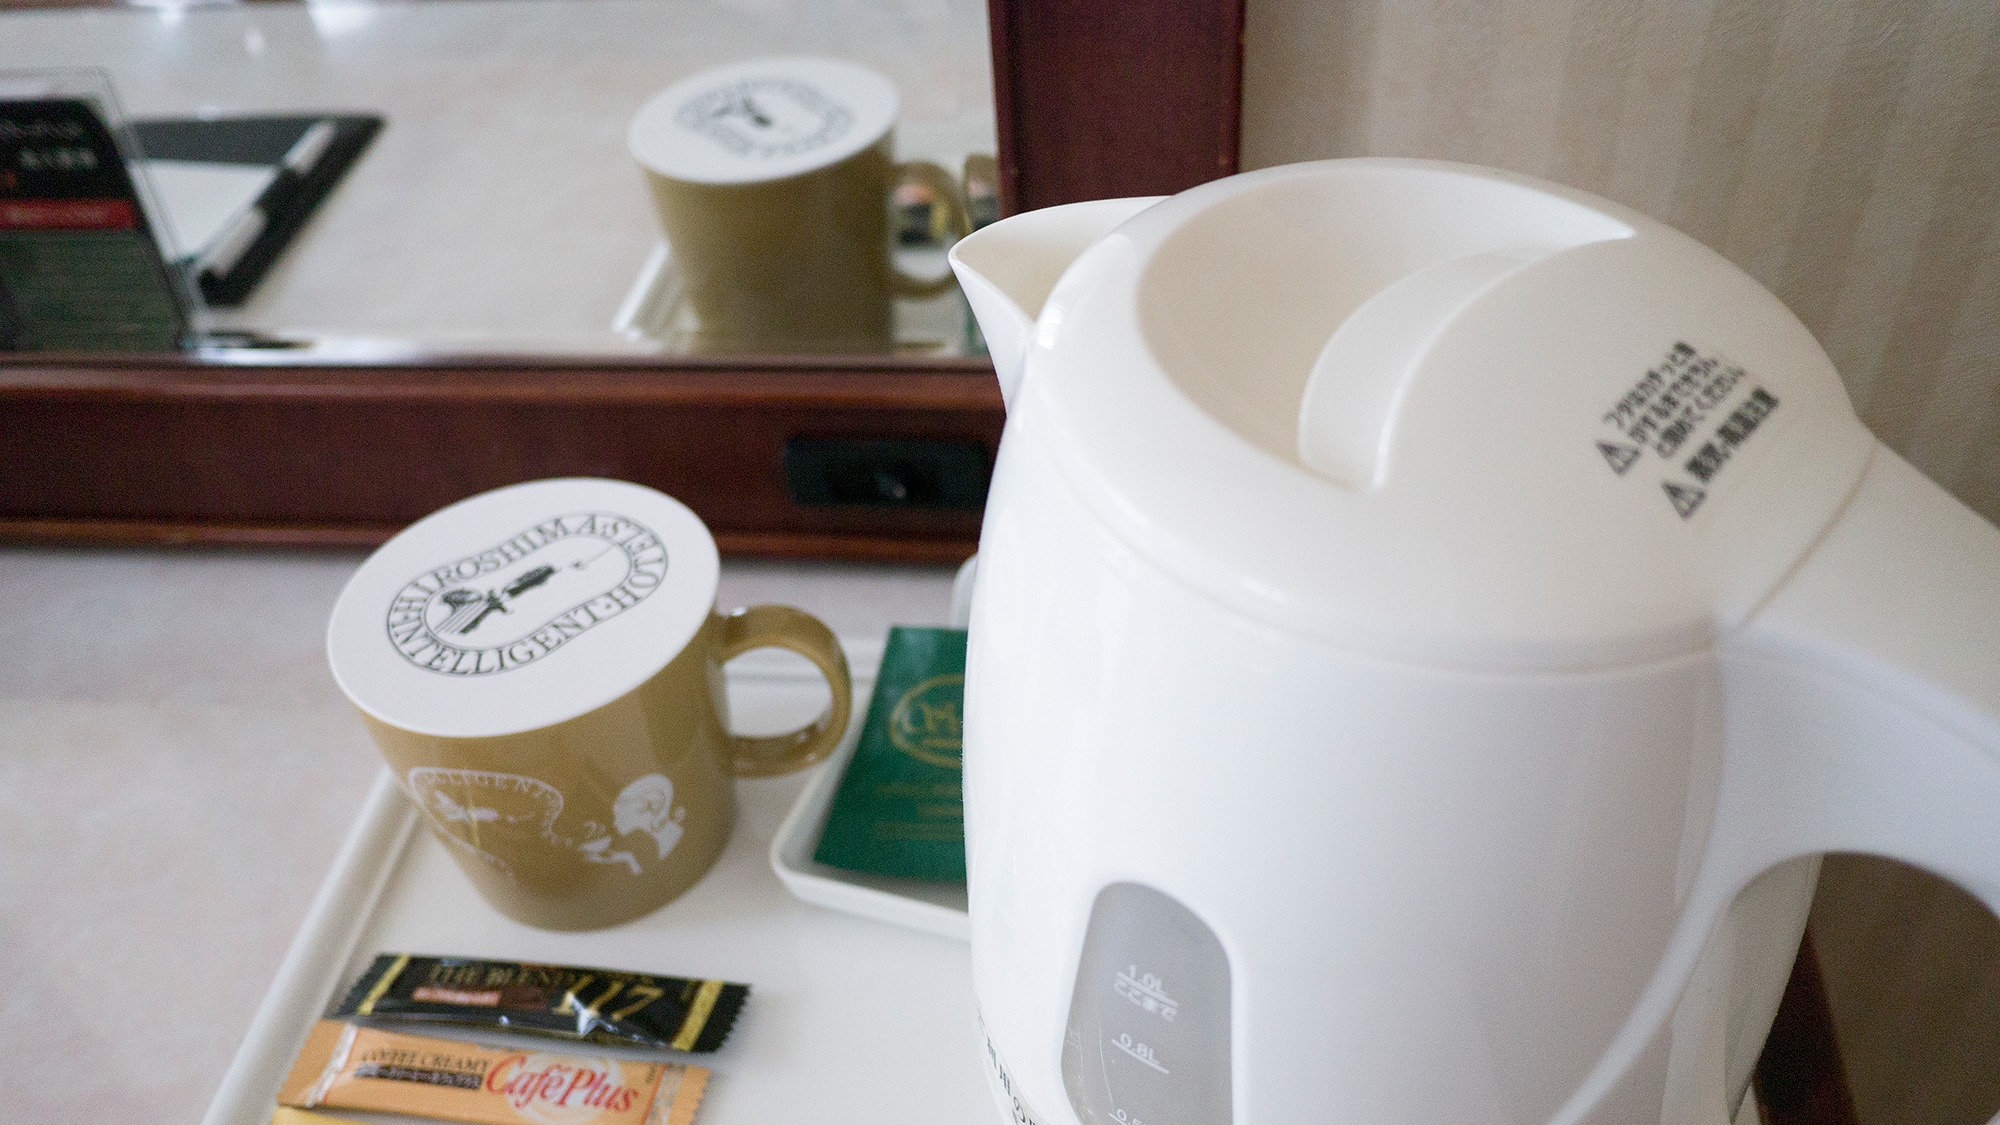 Electric kettle and original mug